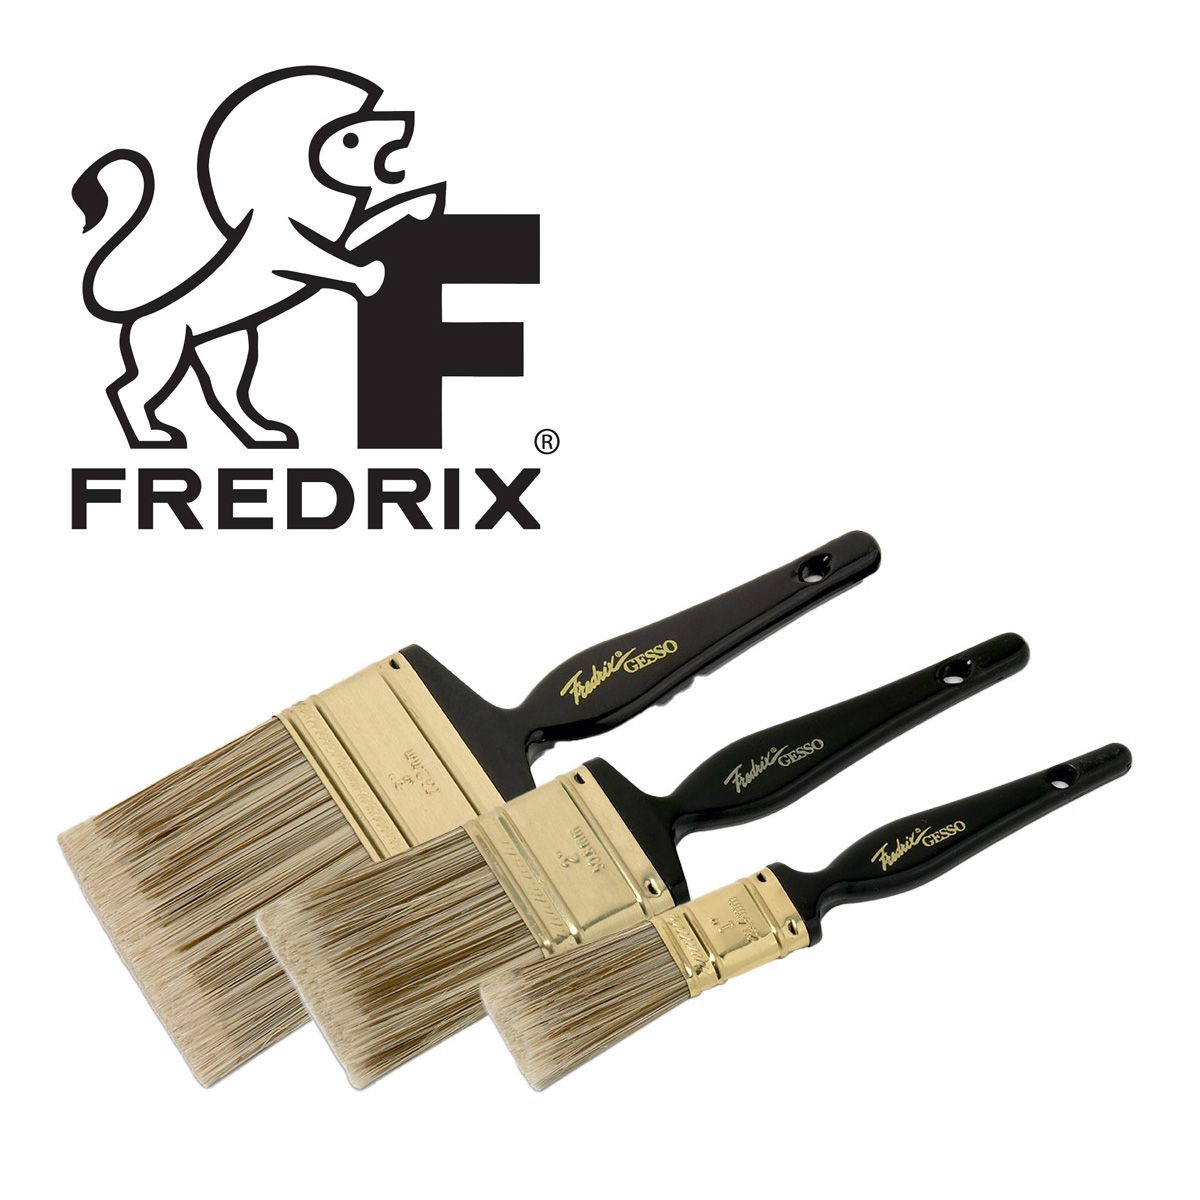 Fredrix Gesso Brushes